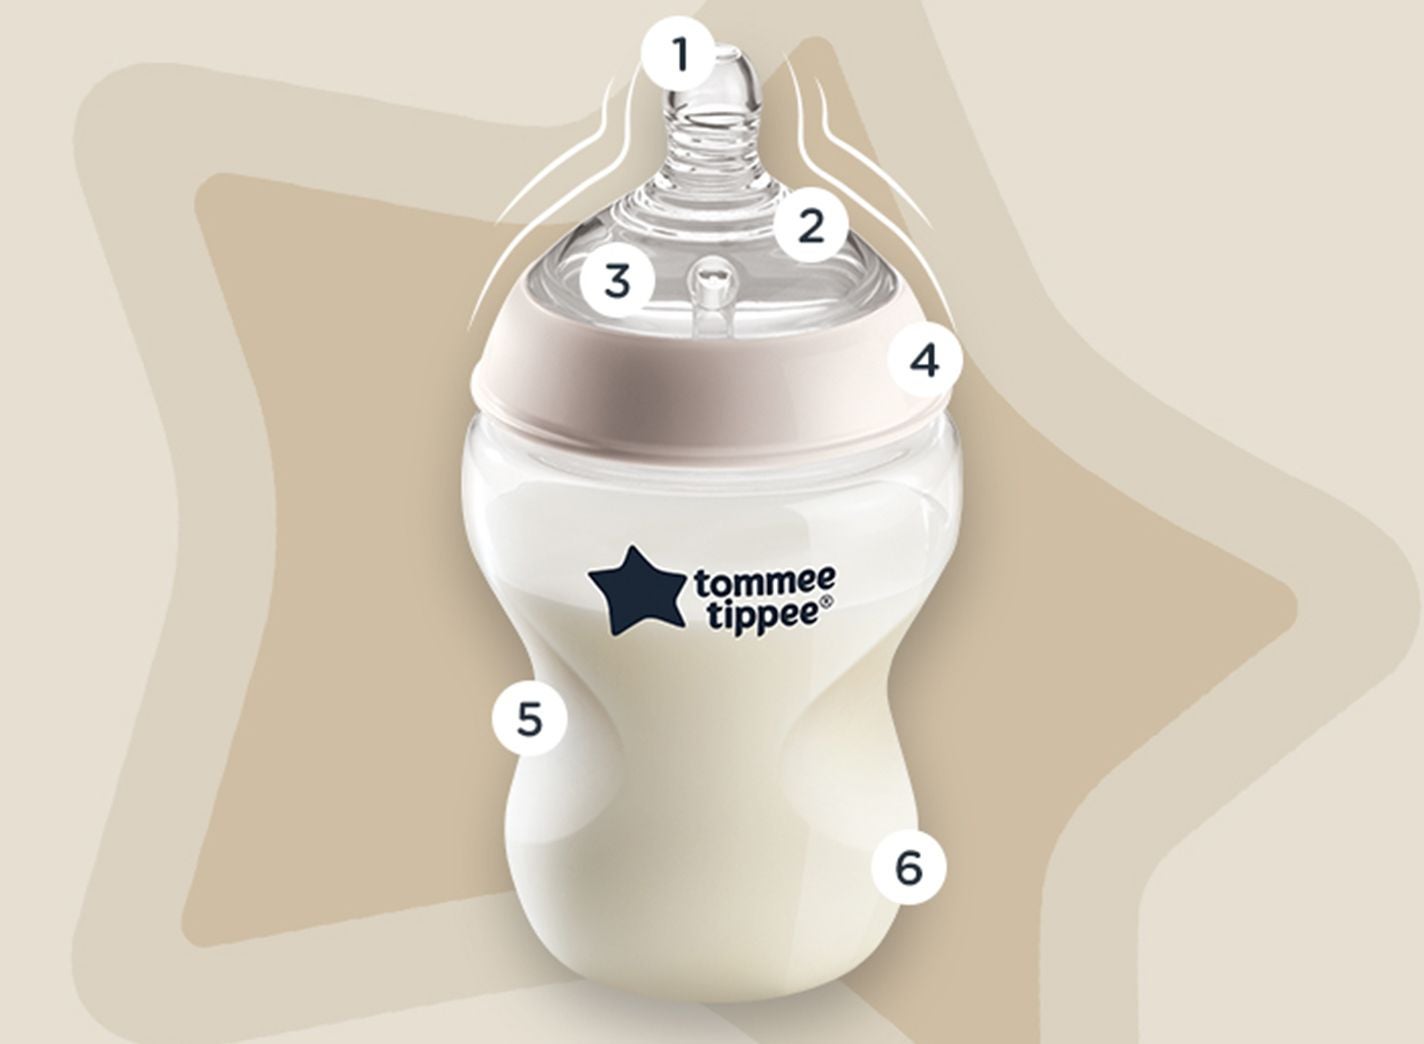 Tommee Tippee Baby Feeding Bottle